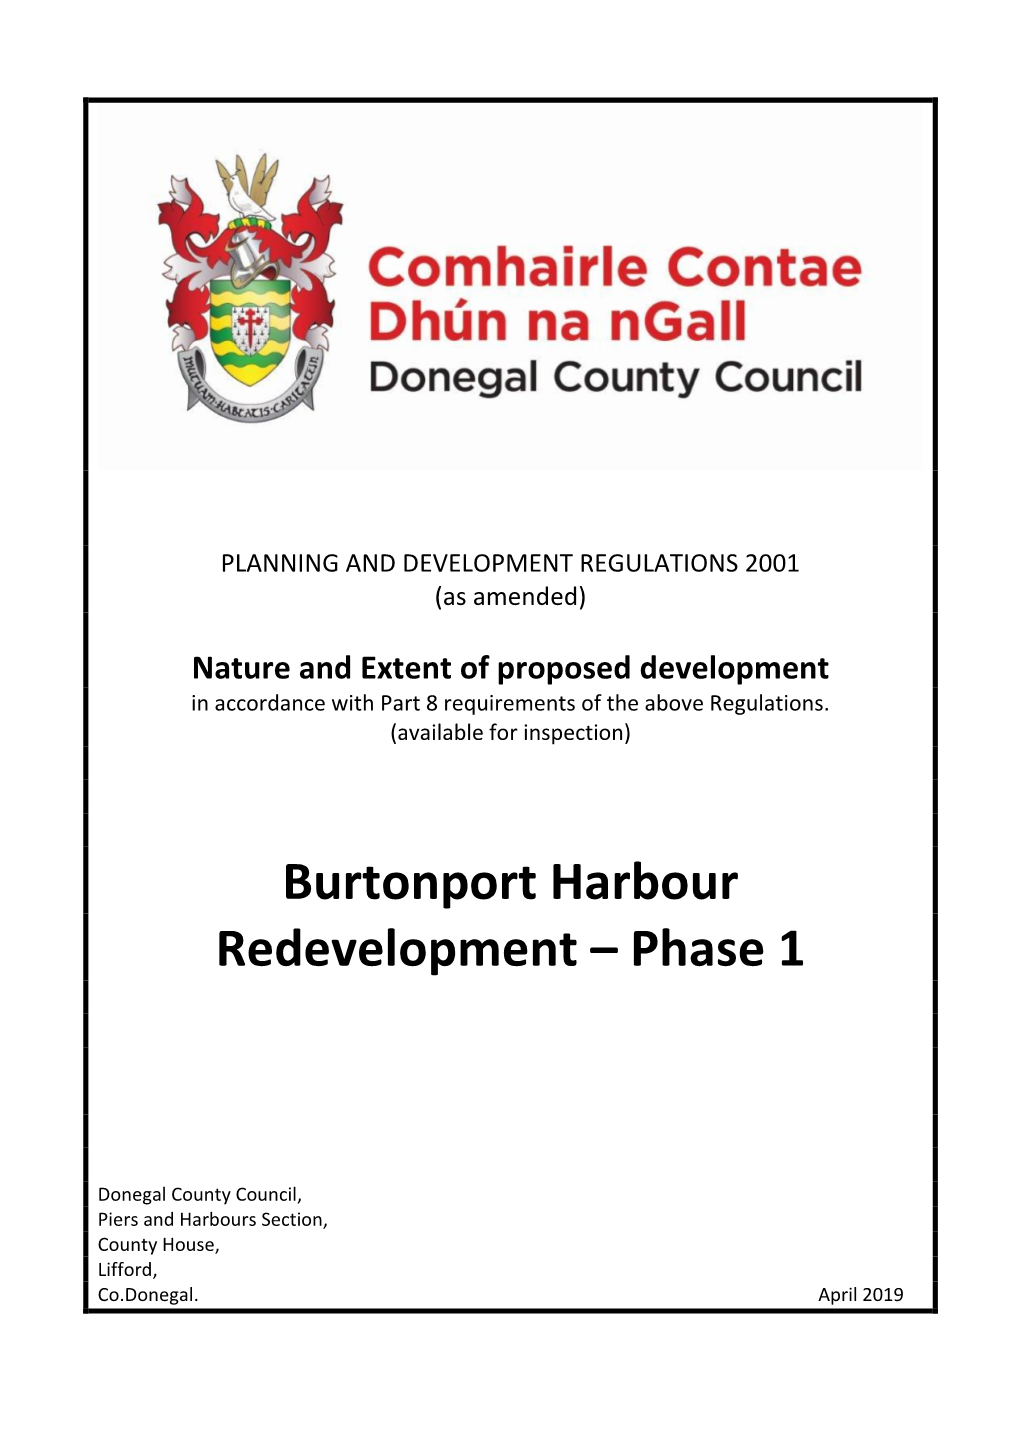 Burtonport Harbour Redevelopment – Phase 1